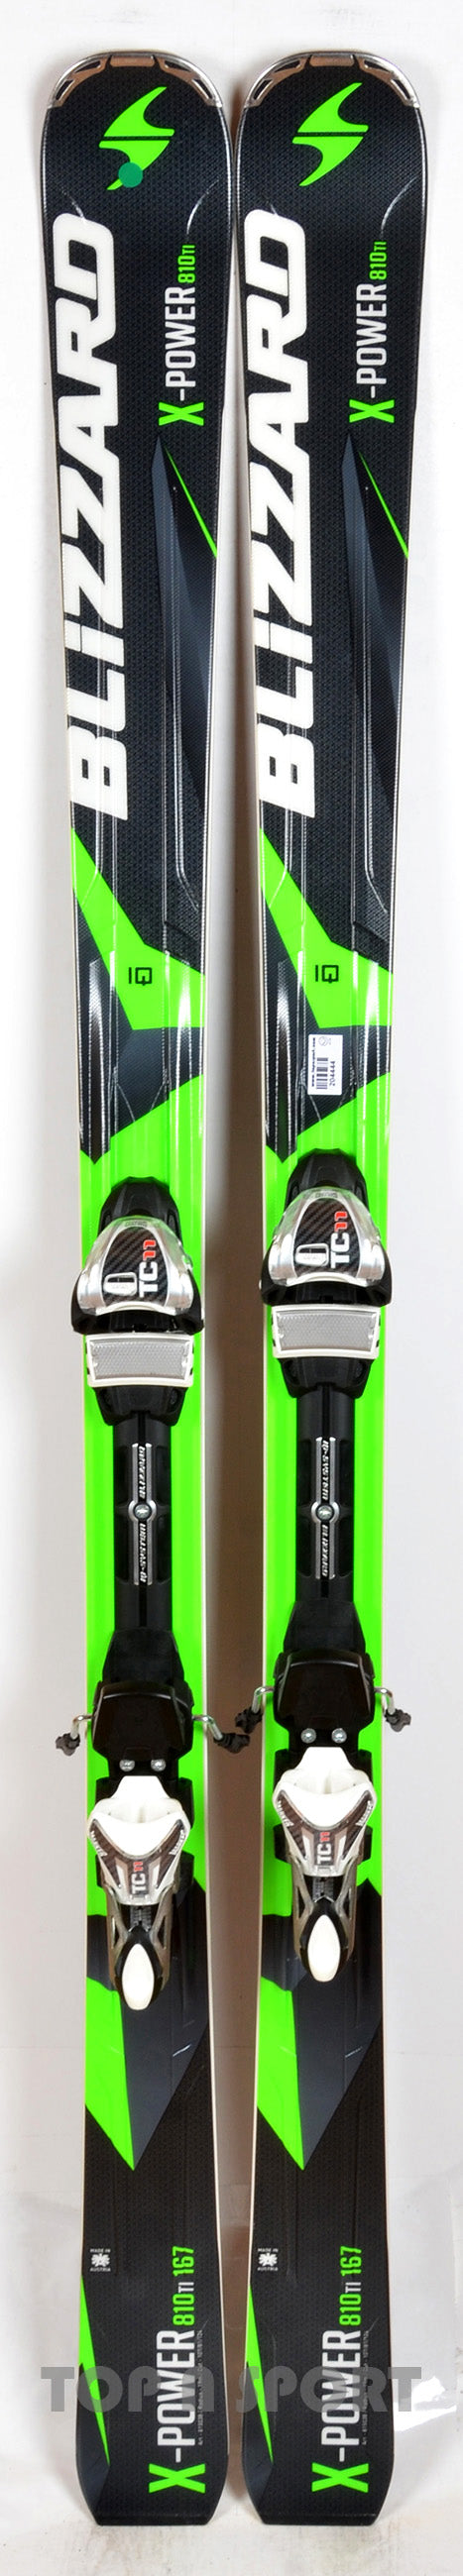 Pack neuf skis Blizzard X-POWER 810 Ti IQ avec fixations - neuf déstockage